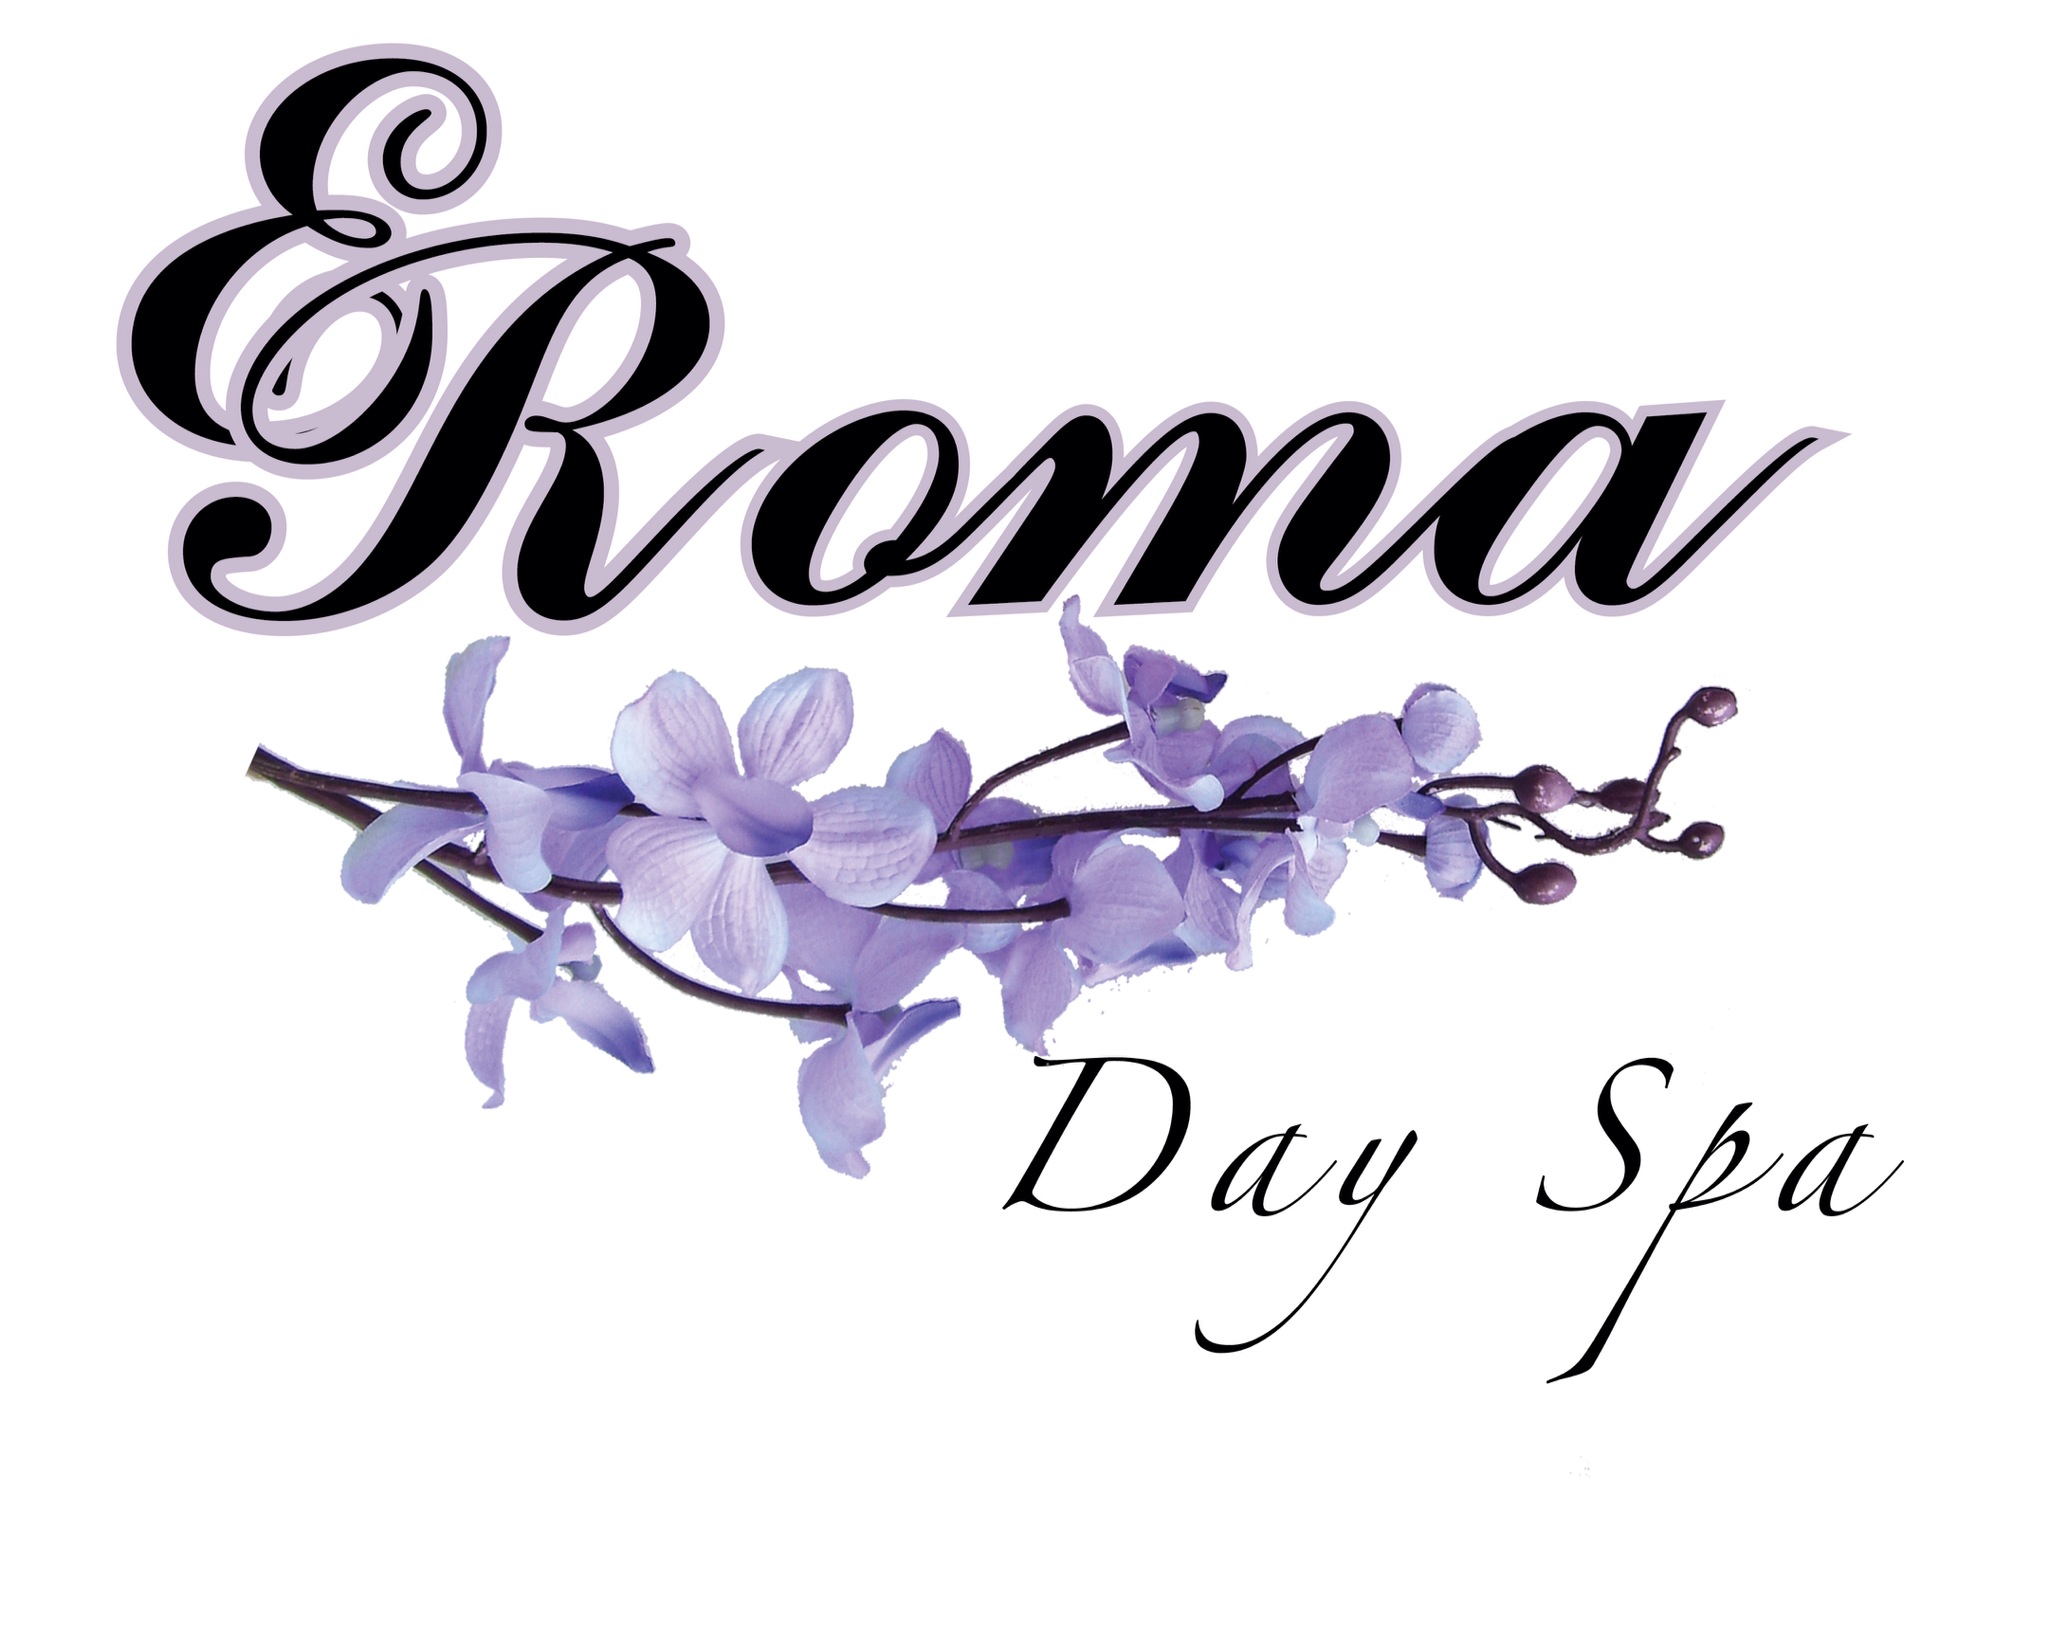 Eroma Day Spa, Inc.